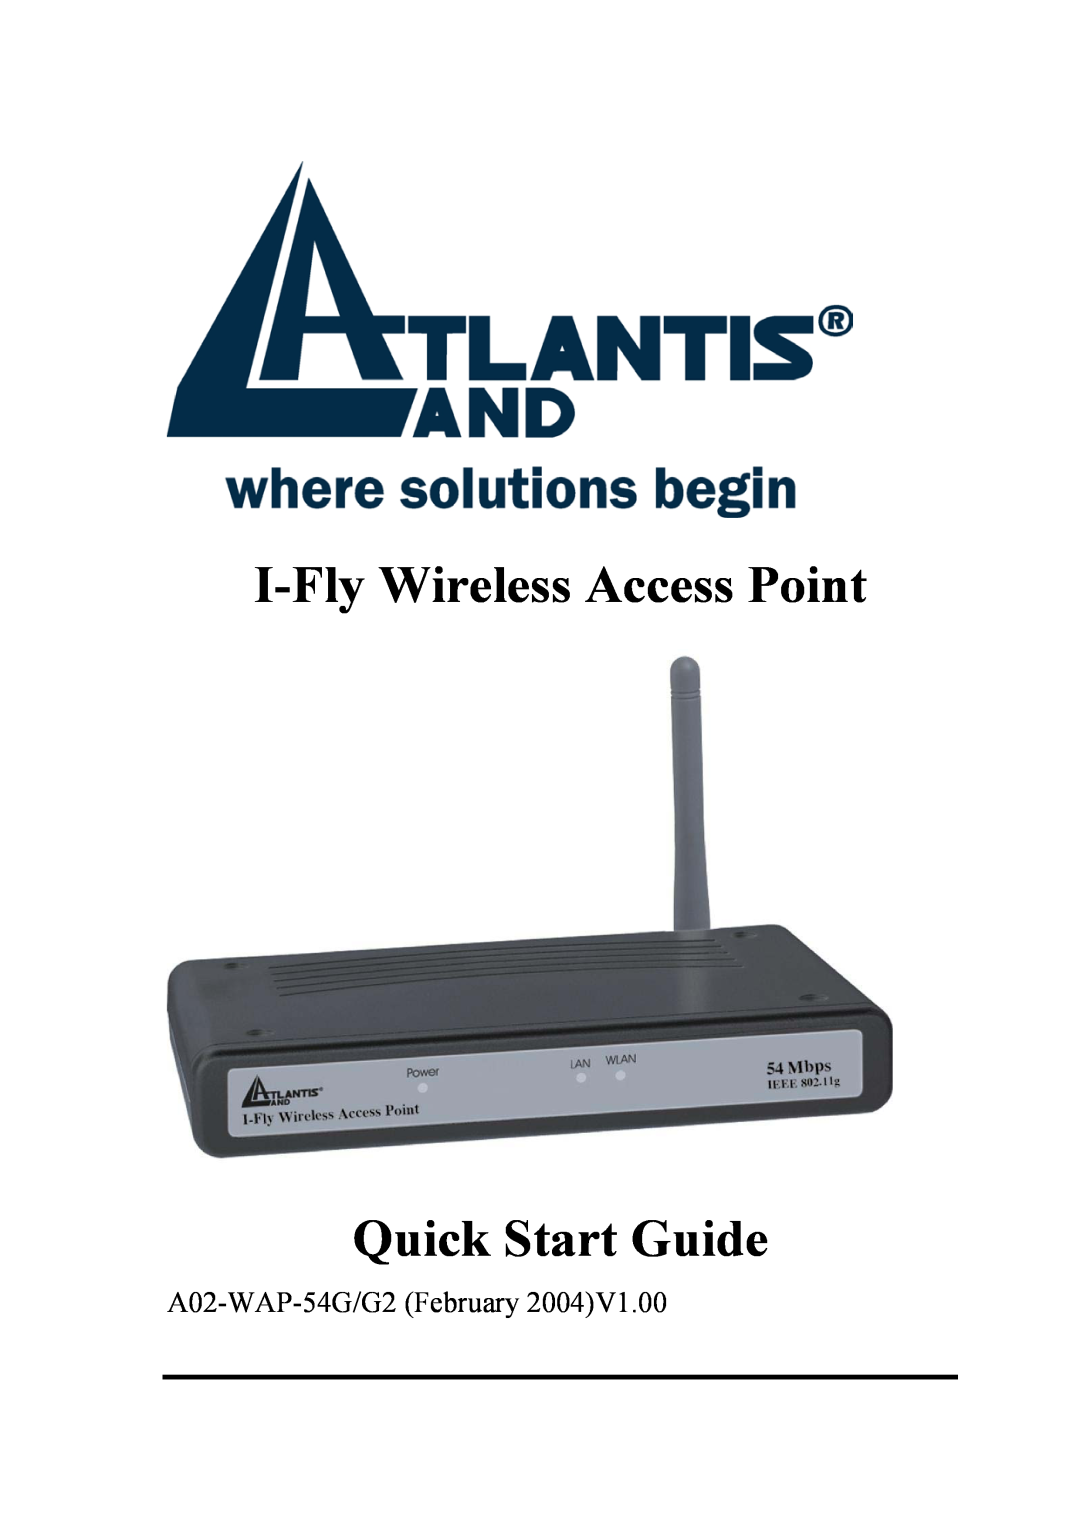 Atlantis Land quick start I-Fly Wireless Access Point Quick Start Guide, A02-WAP-54G/G2 February 